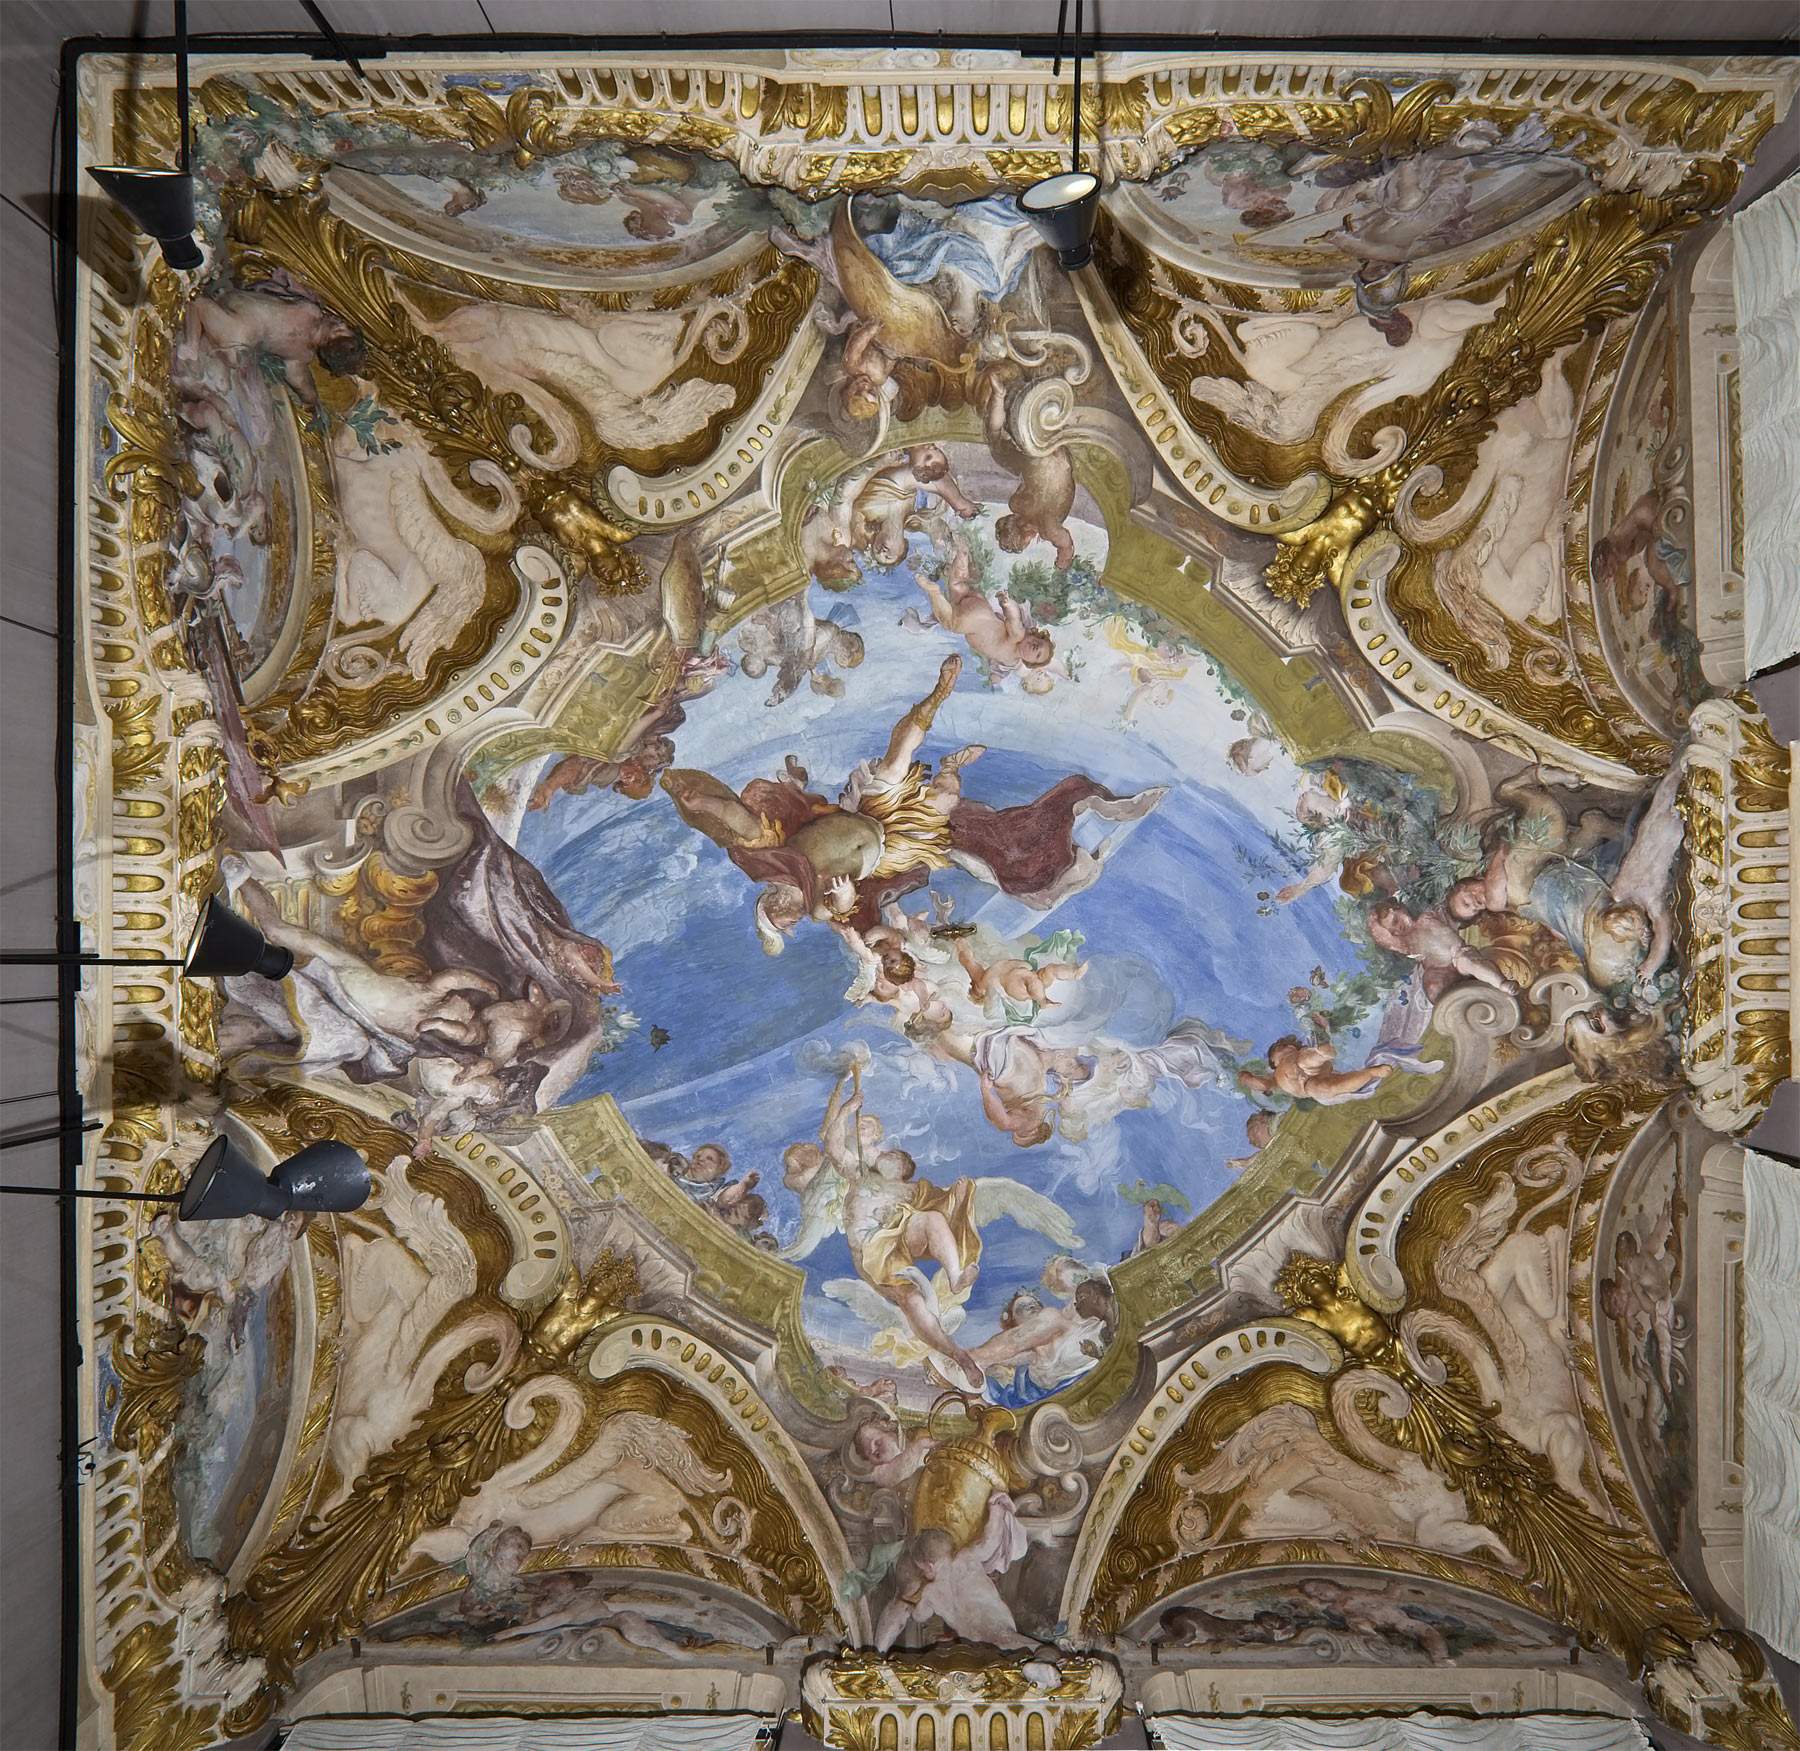 Eighteenth-century art in Italy: developments, styles, major artists 